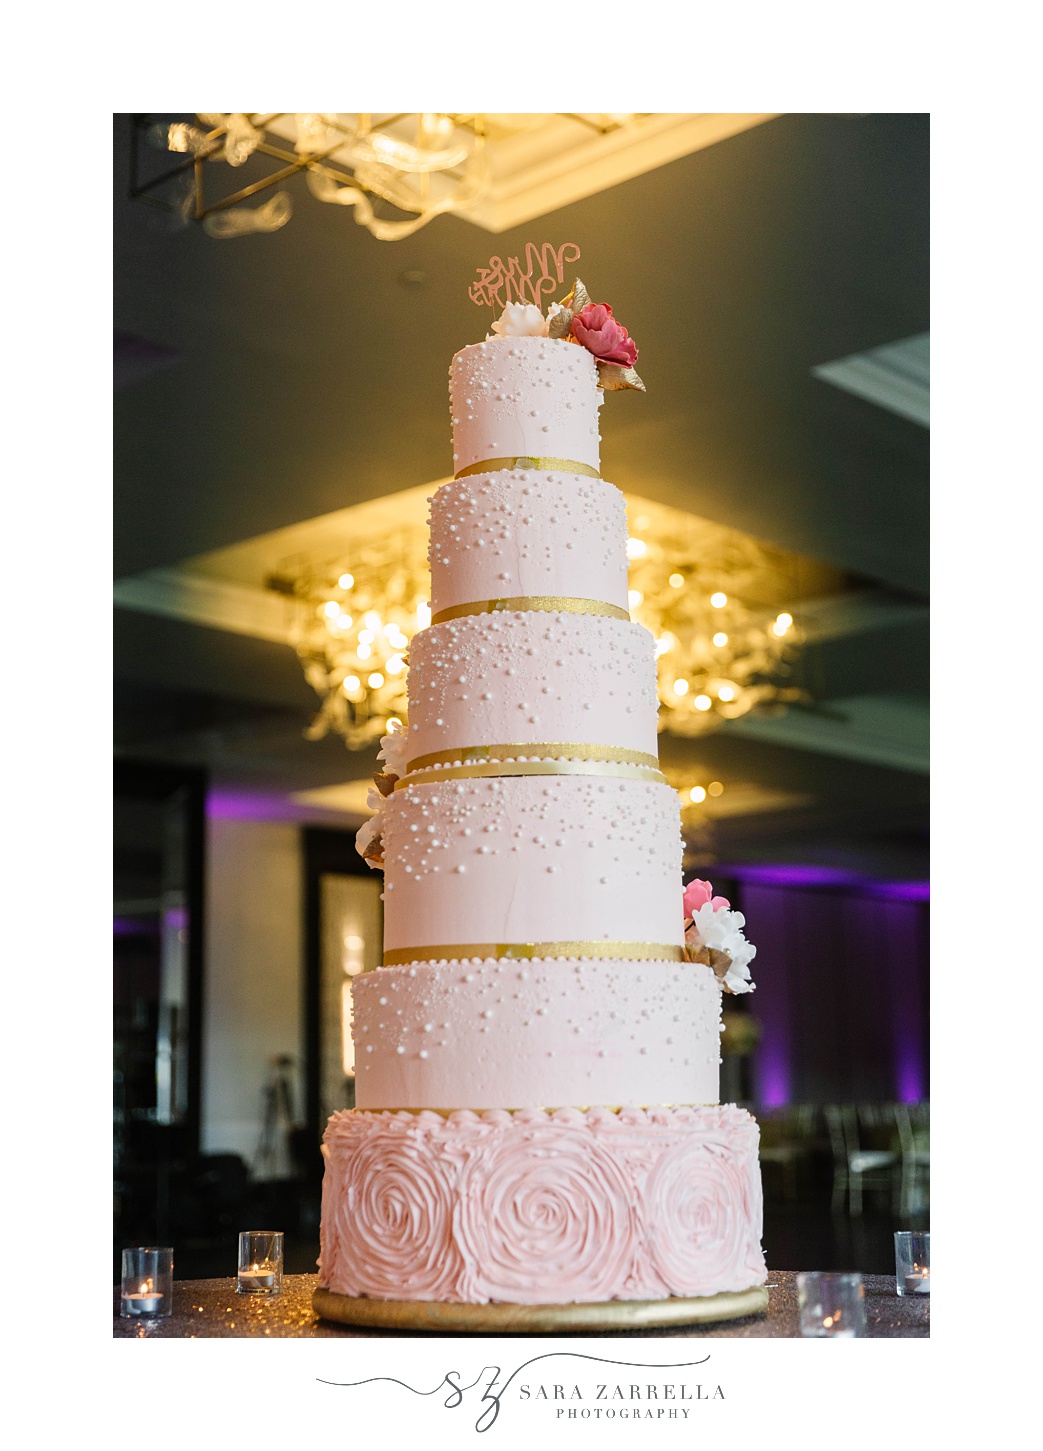 6 tiered wedding cake for Lincoln RI wedding reception